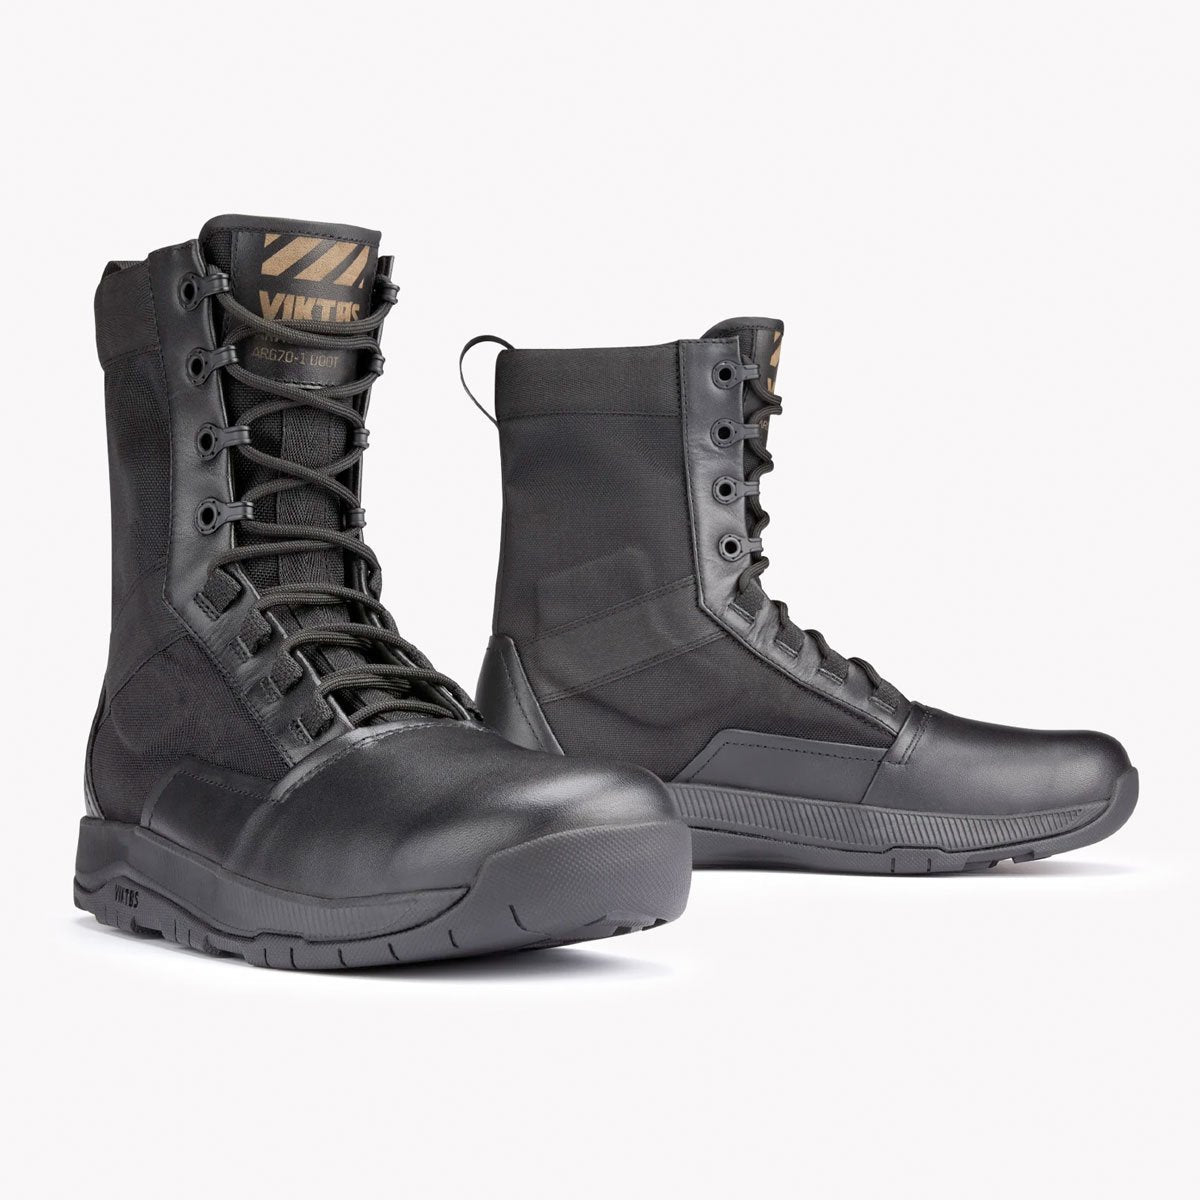 VIKTOS Armory AR670 Safety Composite Toe Boot Black Footwear VIKTOS 6 Tactical Gear Supplier Tactical Distributors Australia